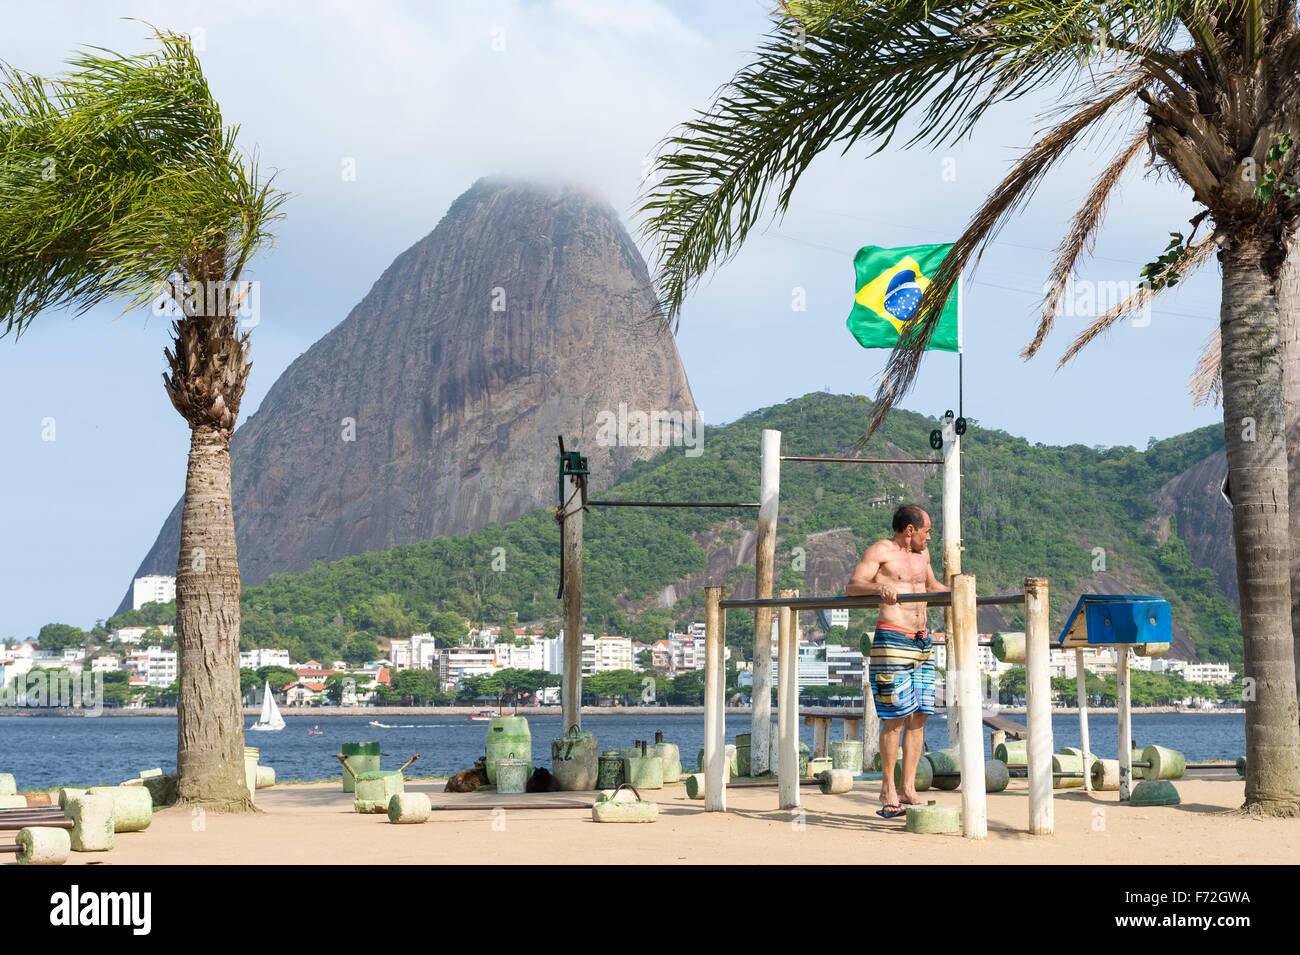 RIO DE JANEIRO, BRAZIL - OCTOBER 17, 2015: Brazilian man exercises at an outdoor workout station in the Flamengo neighborhood. Stock Photo